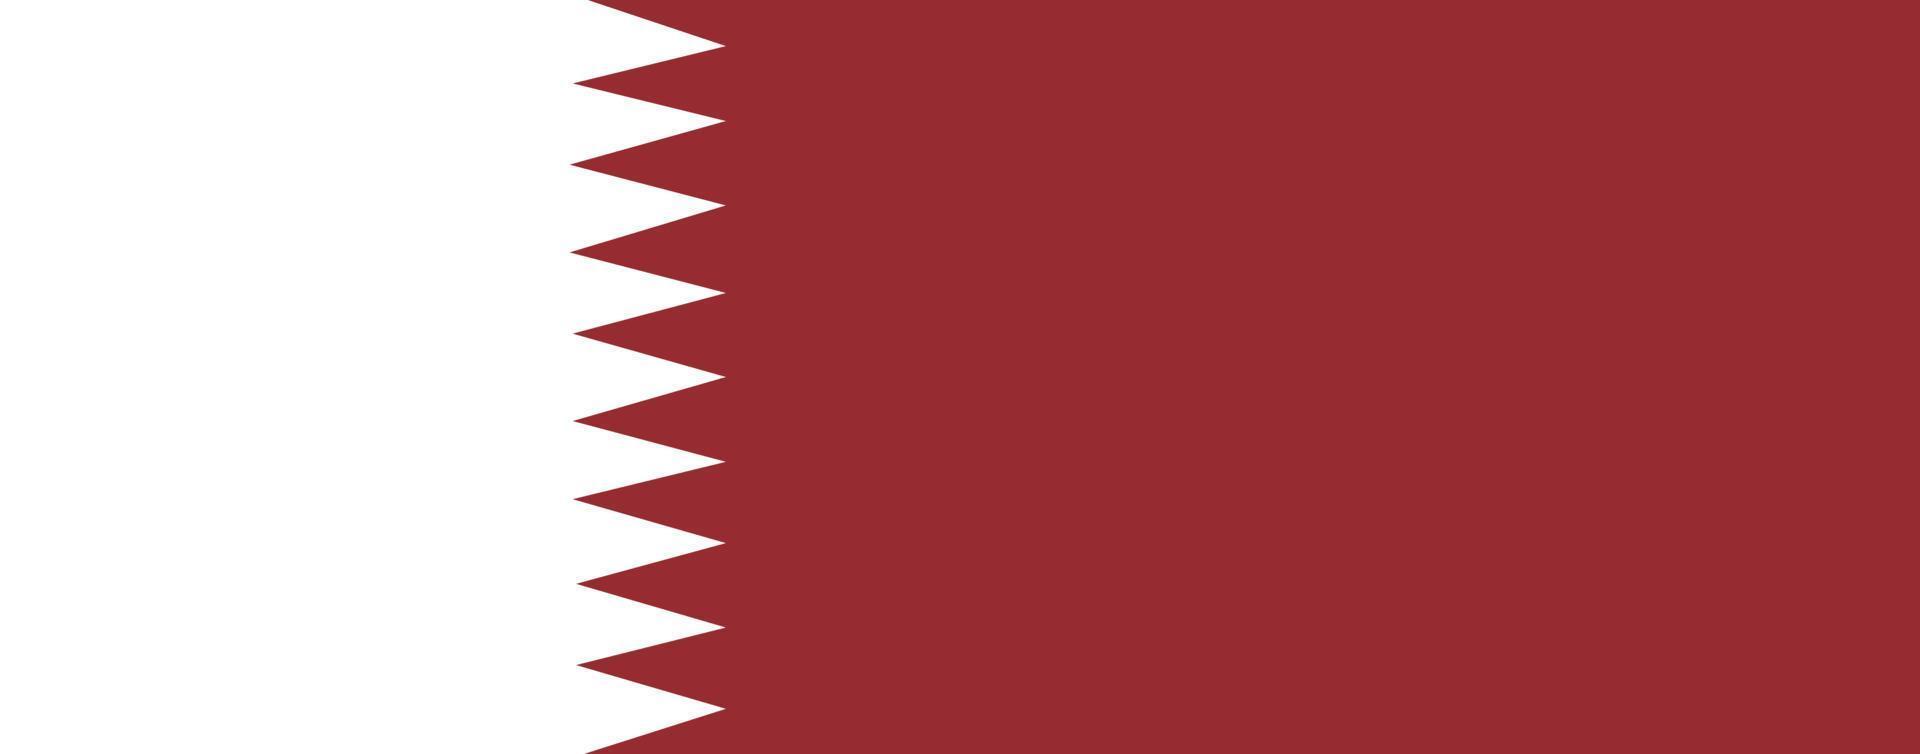 bandeira do Catar. cores e proporções oficiais. bandeira nacional do Catar. vetor